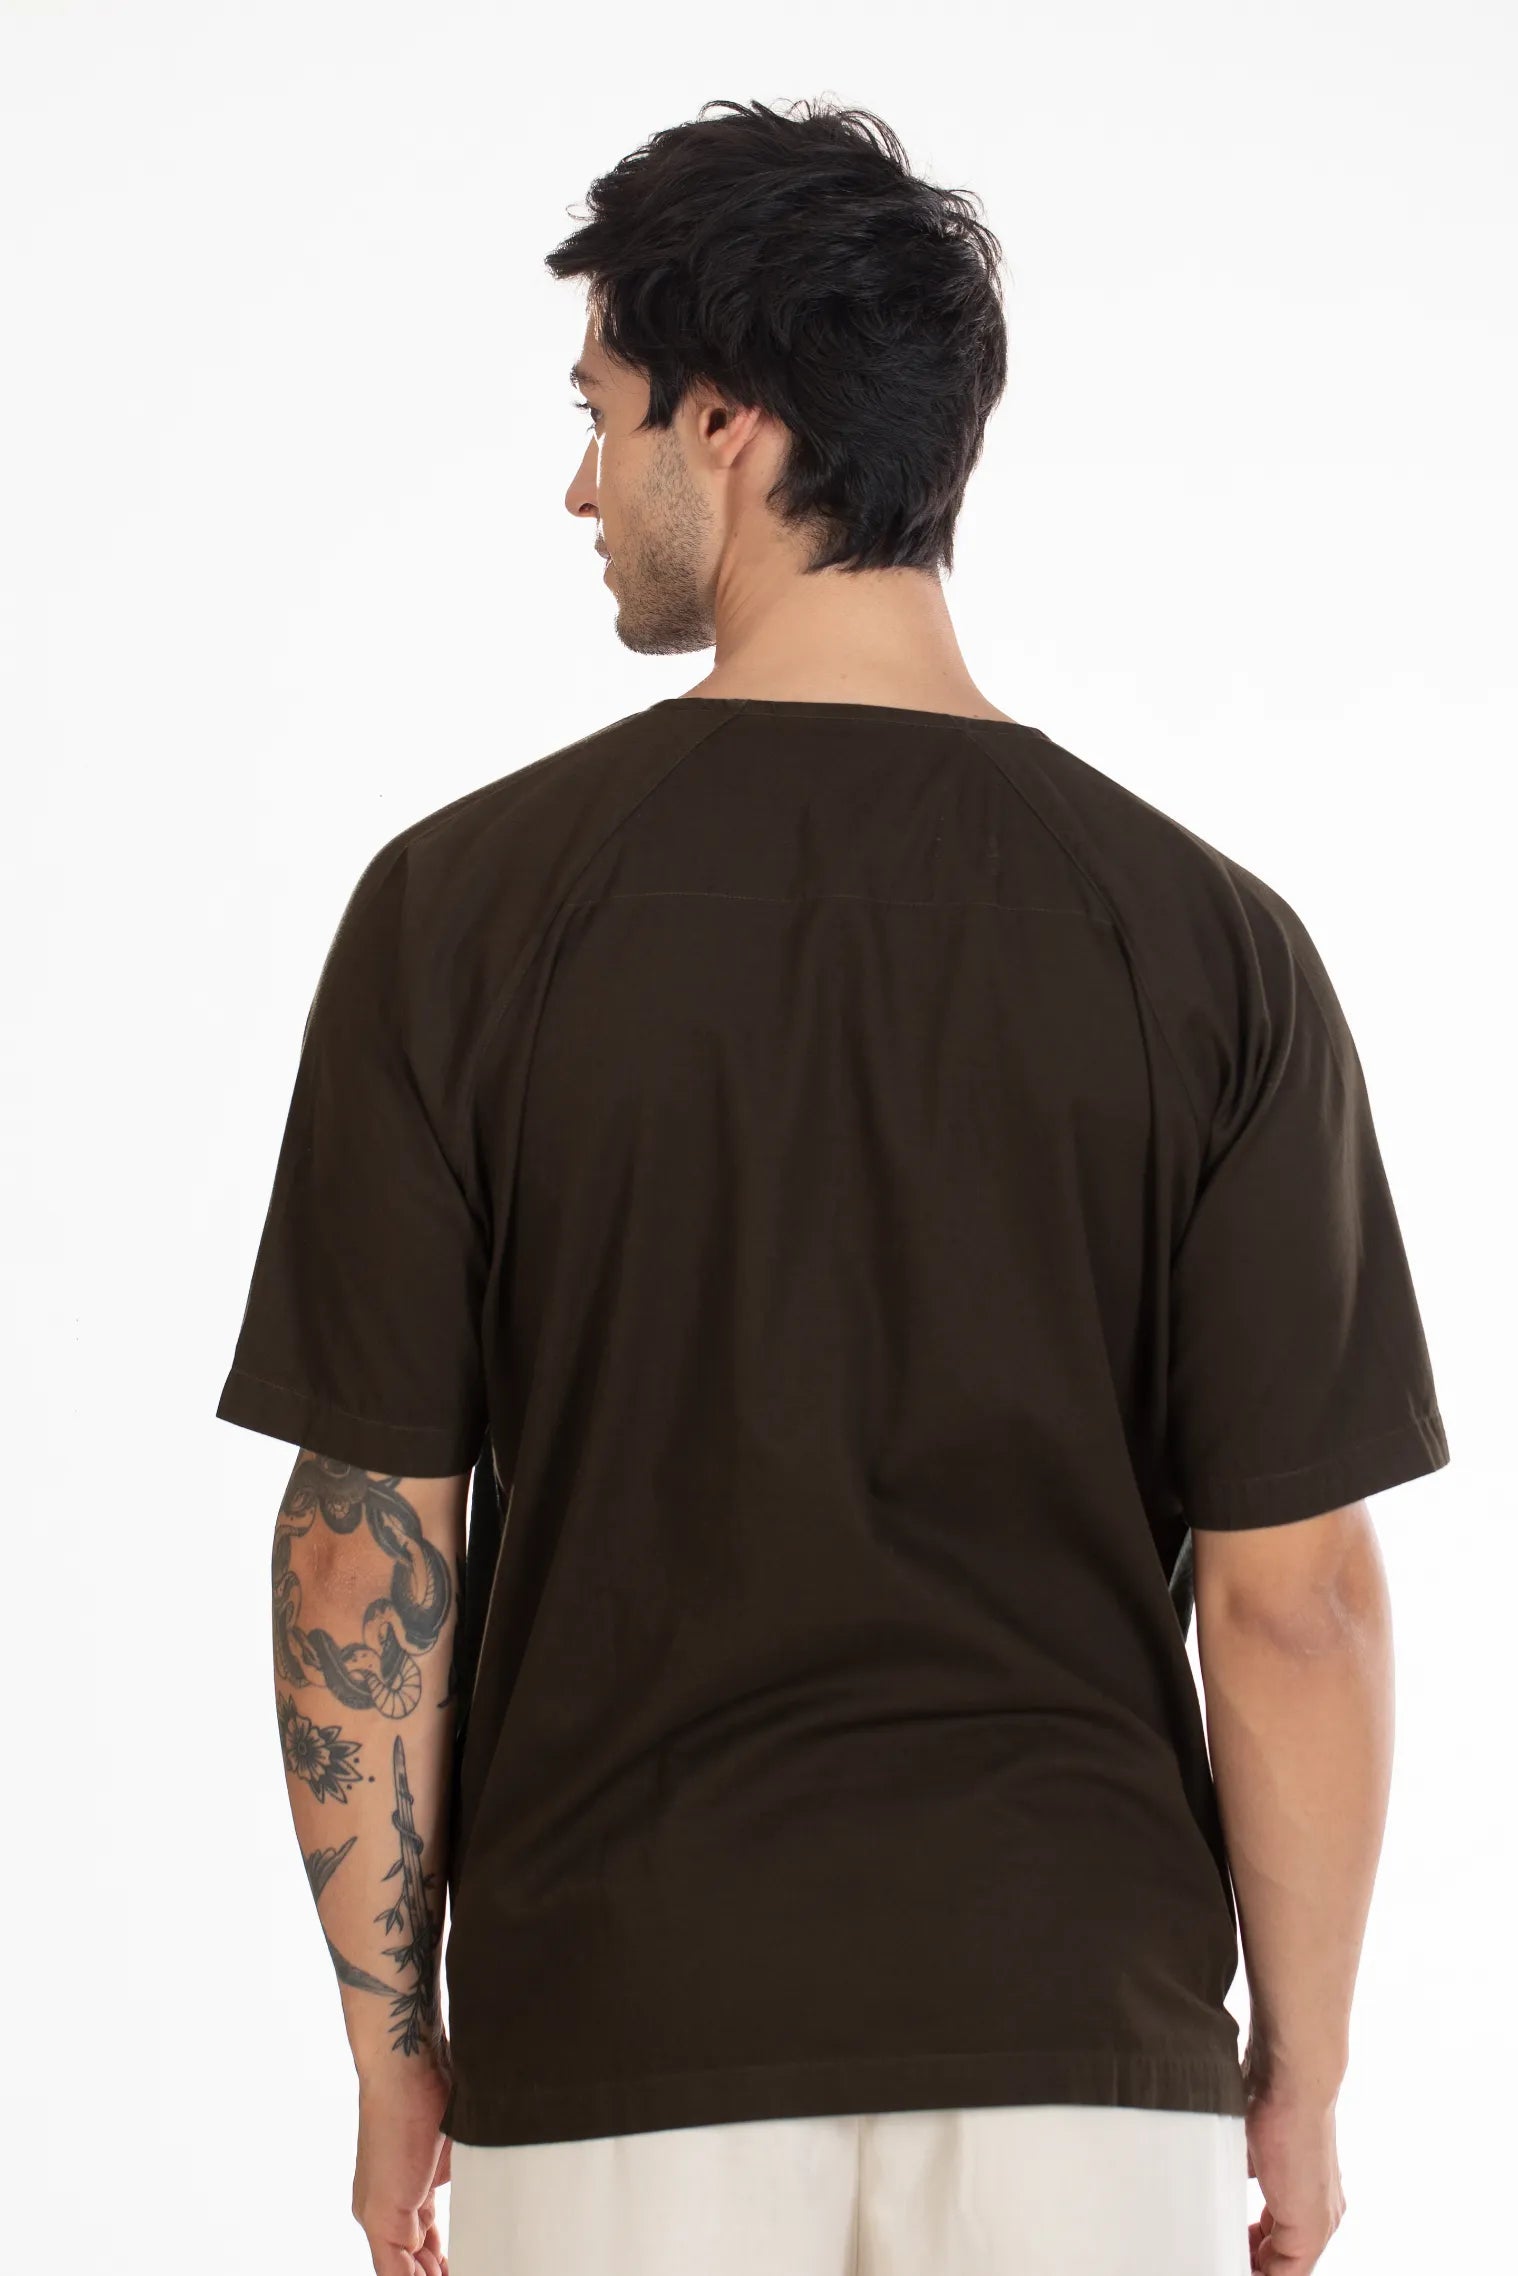 Buy Raglan Half Sleeve Shirt Online